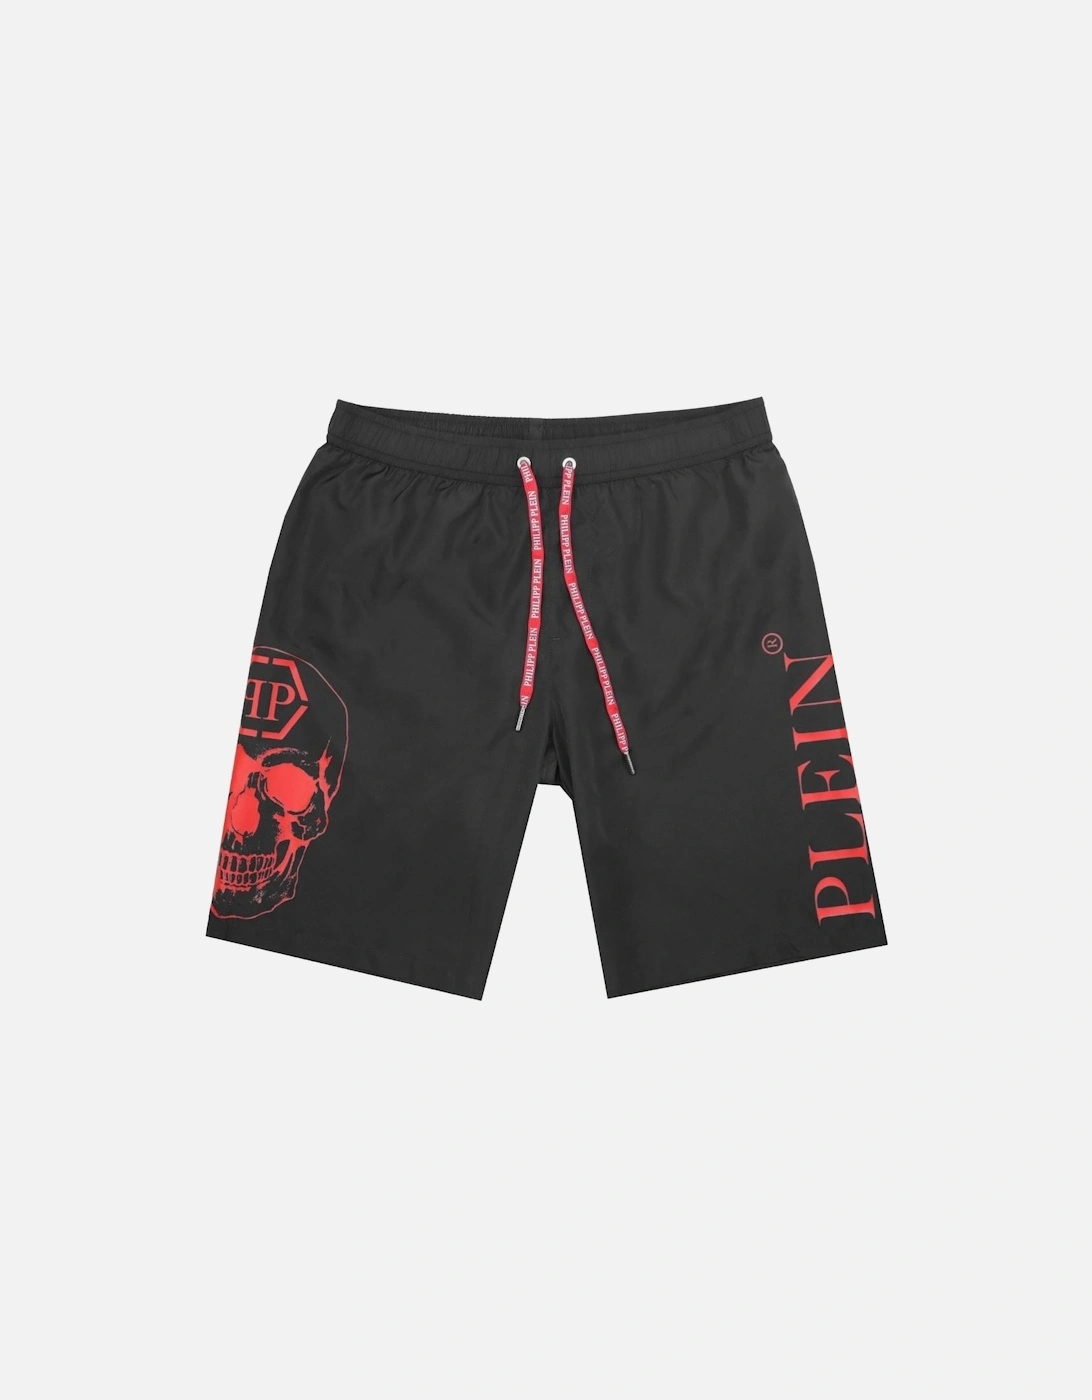 Men's Philipp Plein PP Skull Black Swim Shorts - Size: 39/38/32